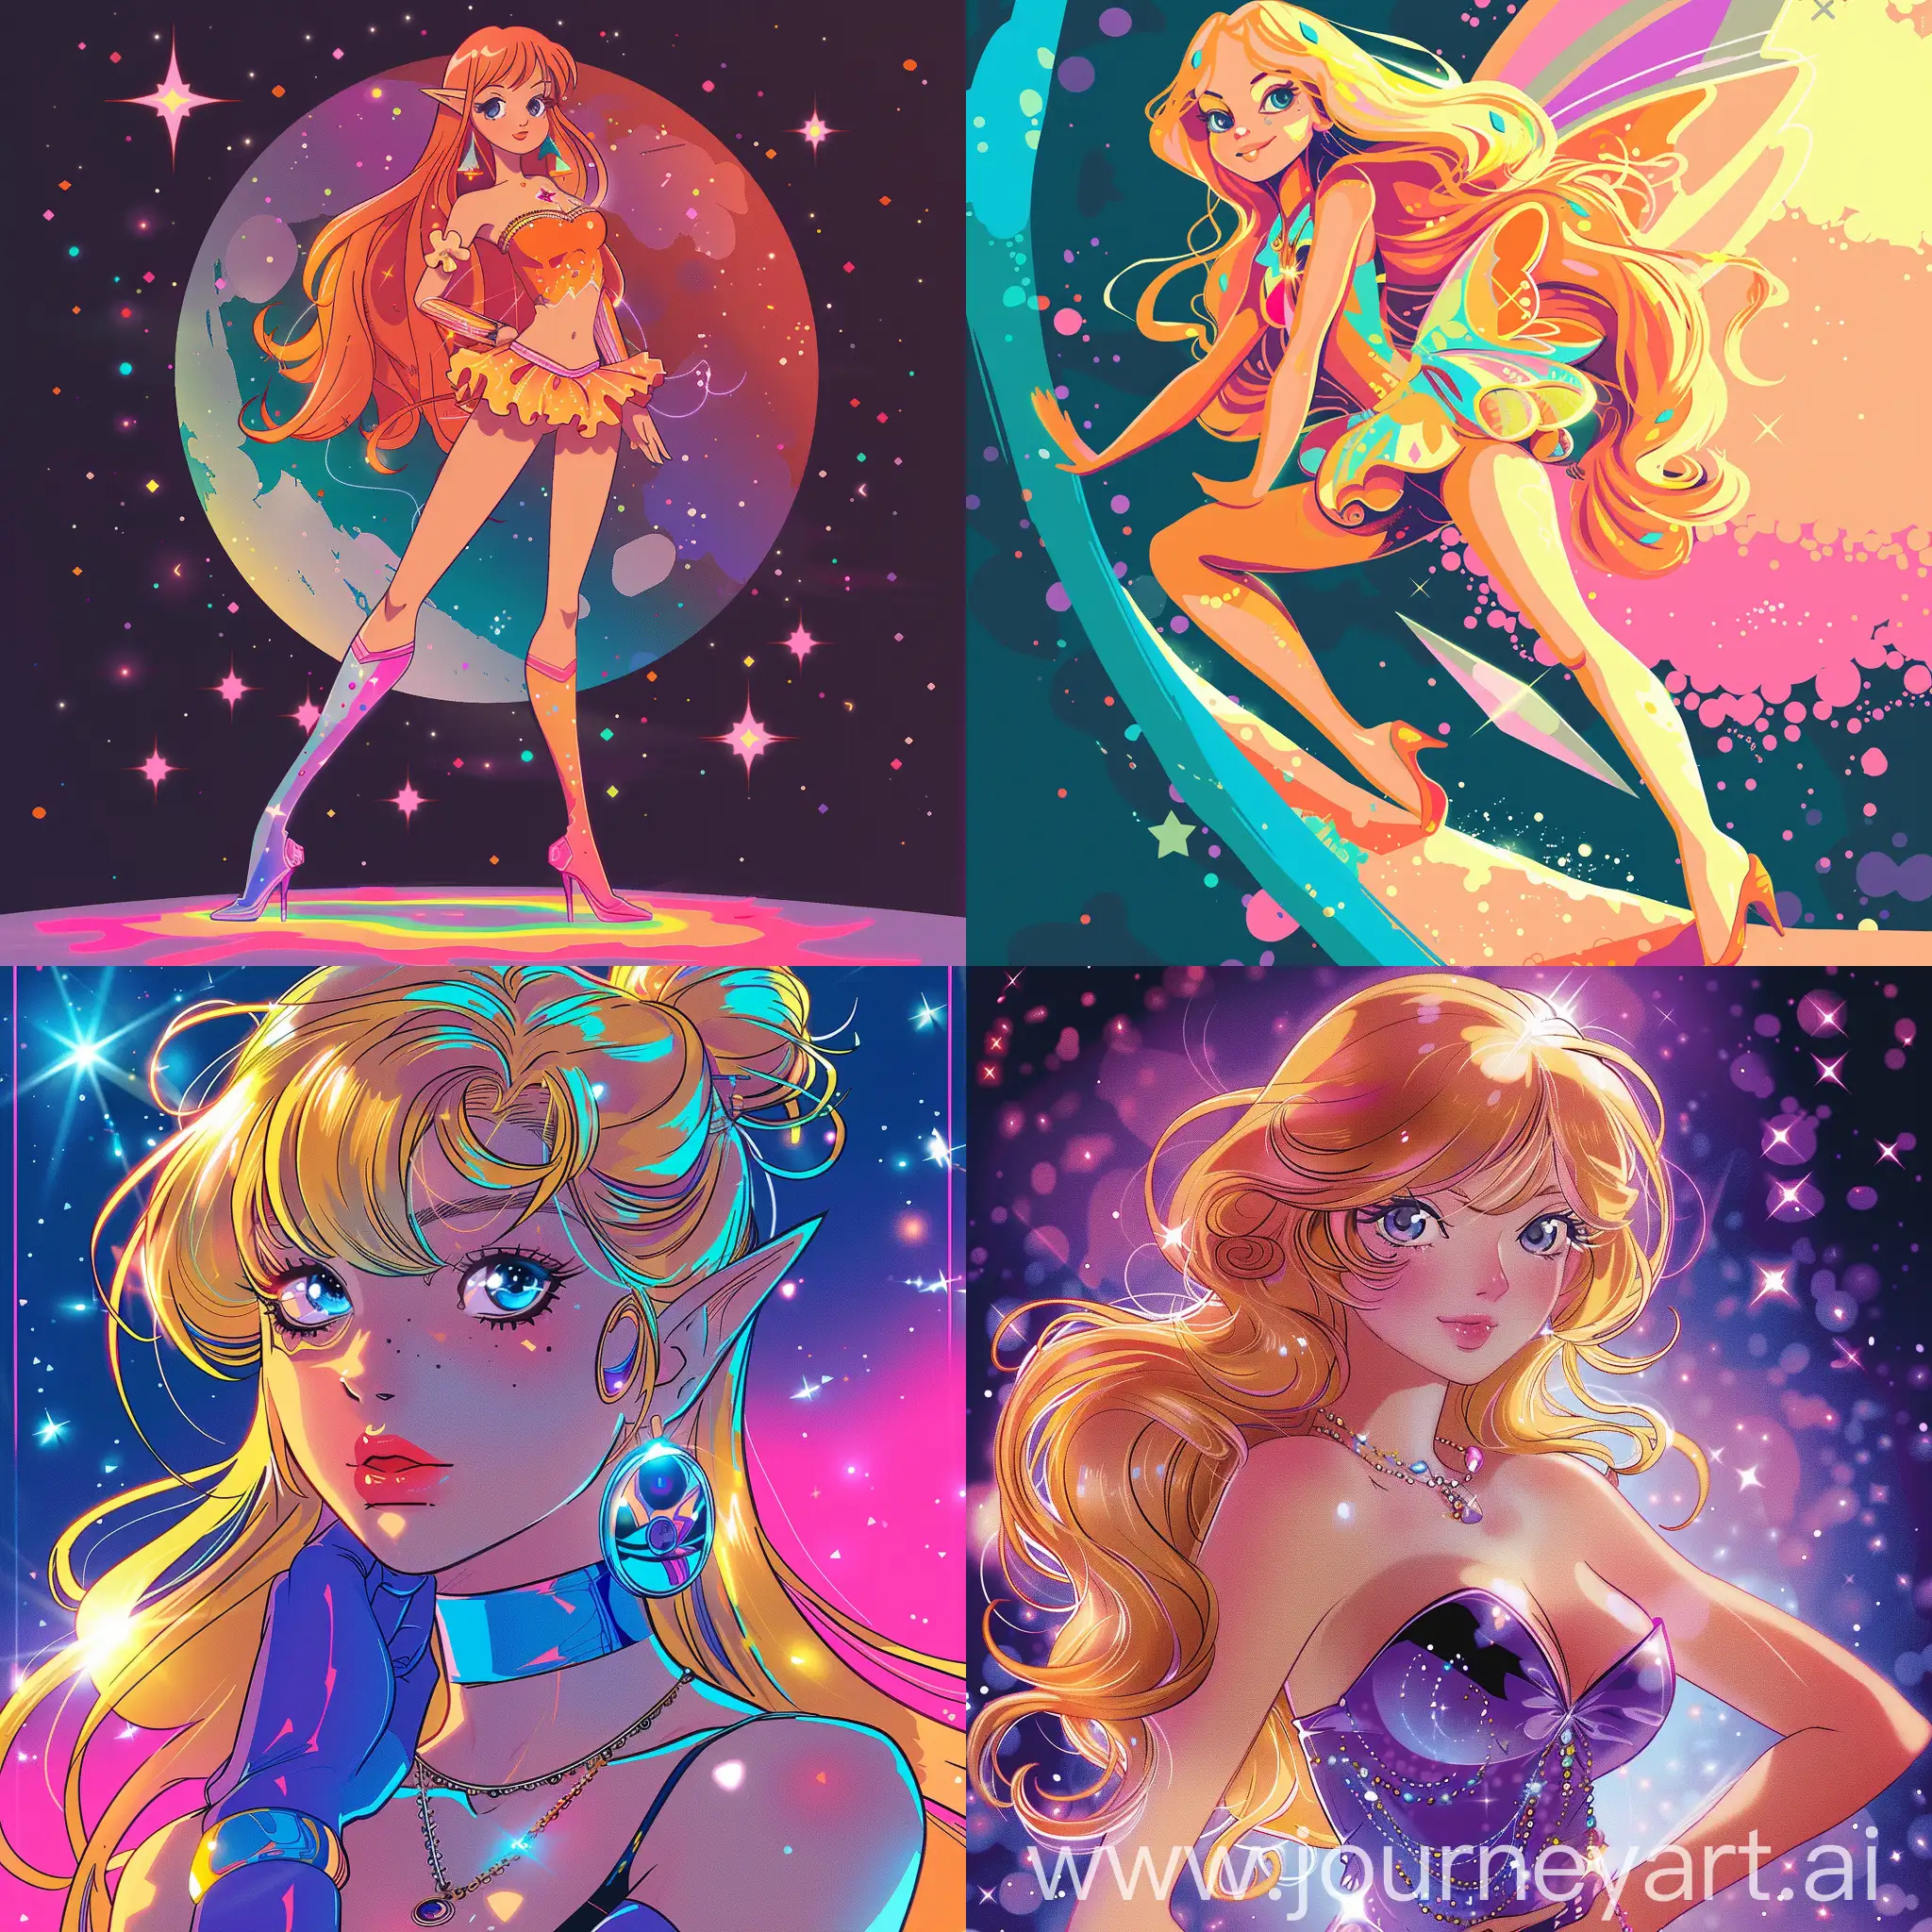 Enchanting-Winx-Fairy-in-Nostalgic-90s-Anime-Style